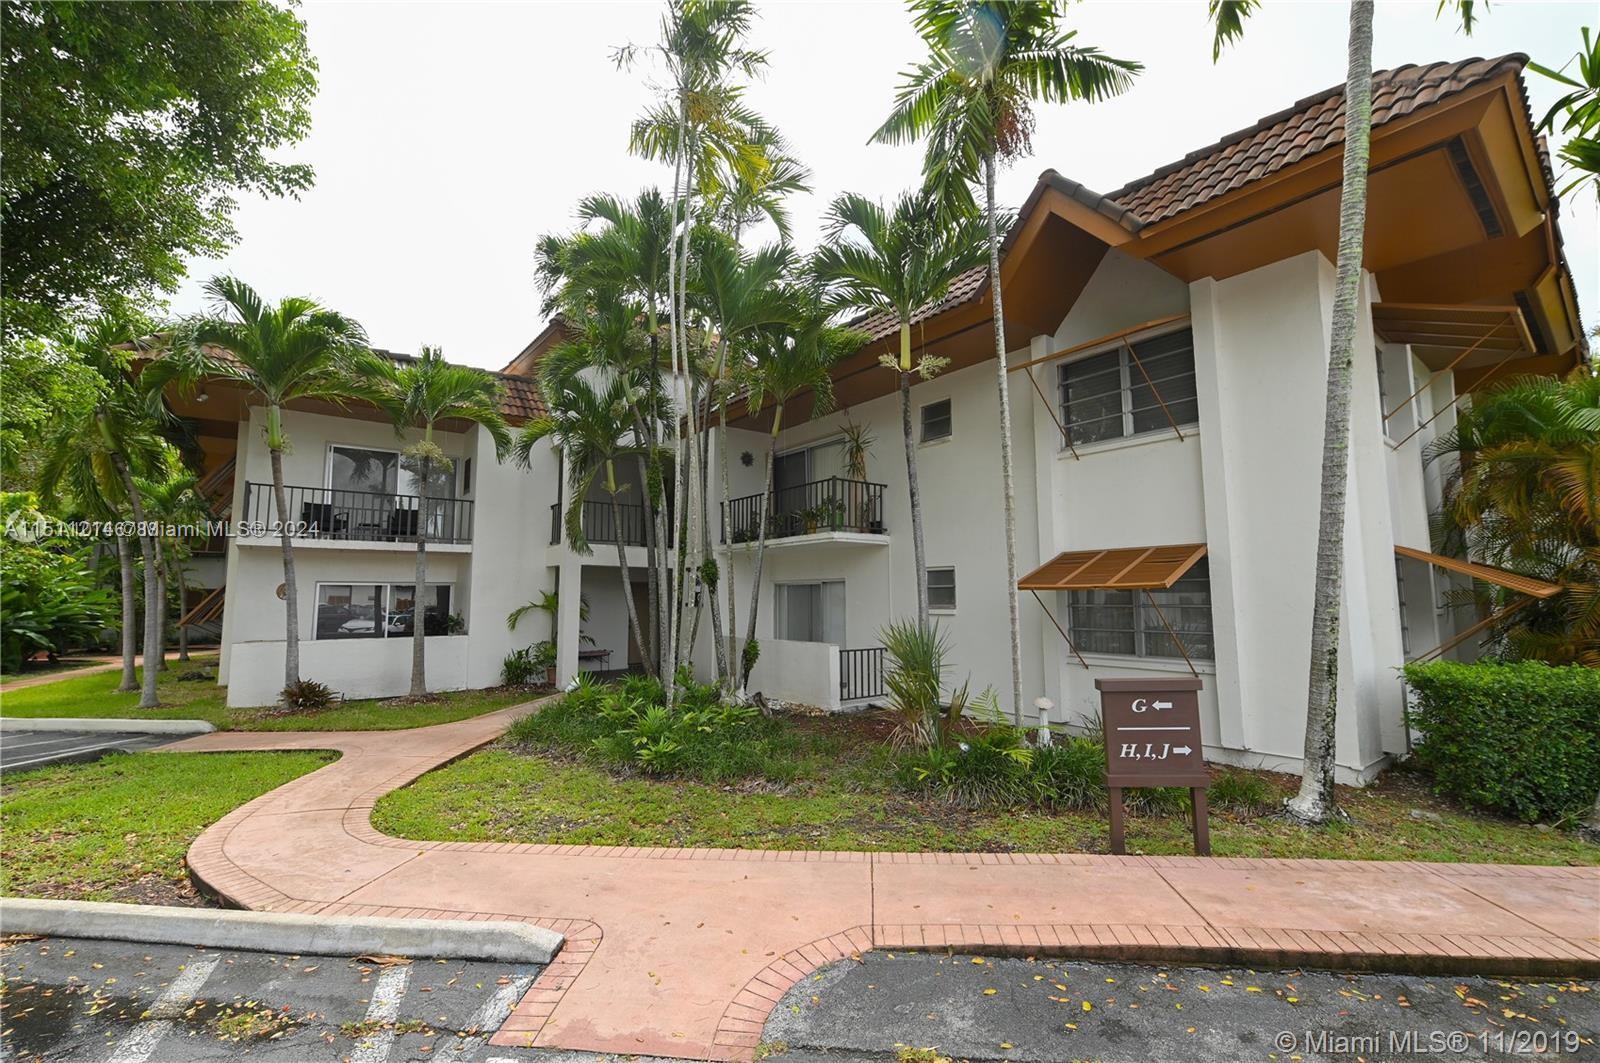 Rental Property at 9350 Sw 77th Ave G8, Miami, Broward County, Florida - Bedrooms: 3 
Bathrooms: 2  - $2,775 MO.